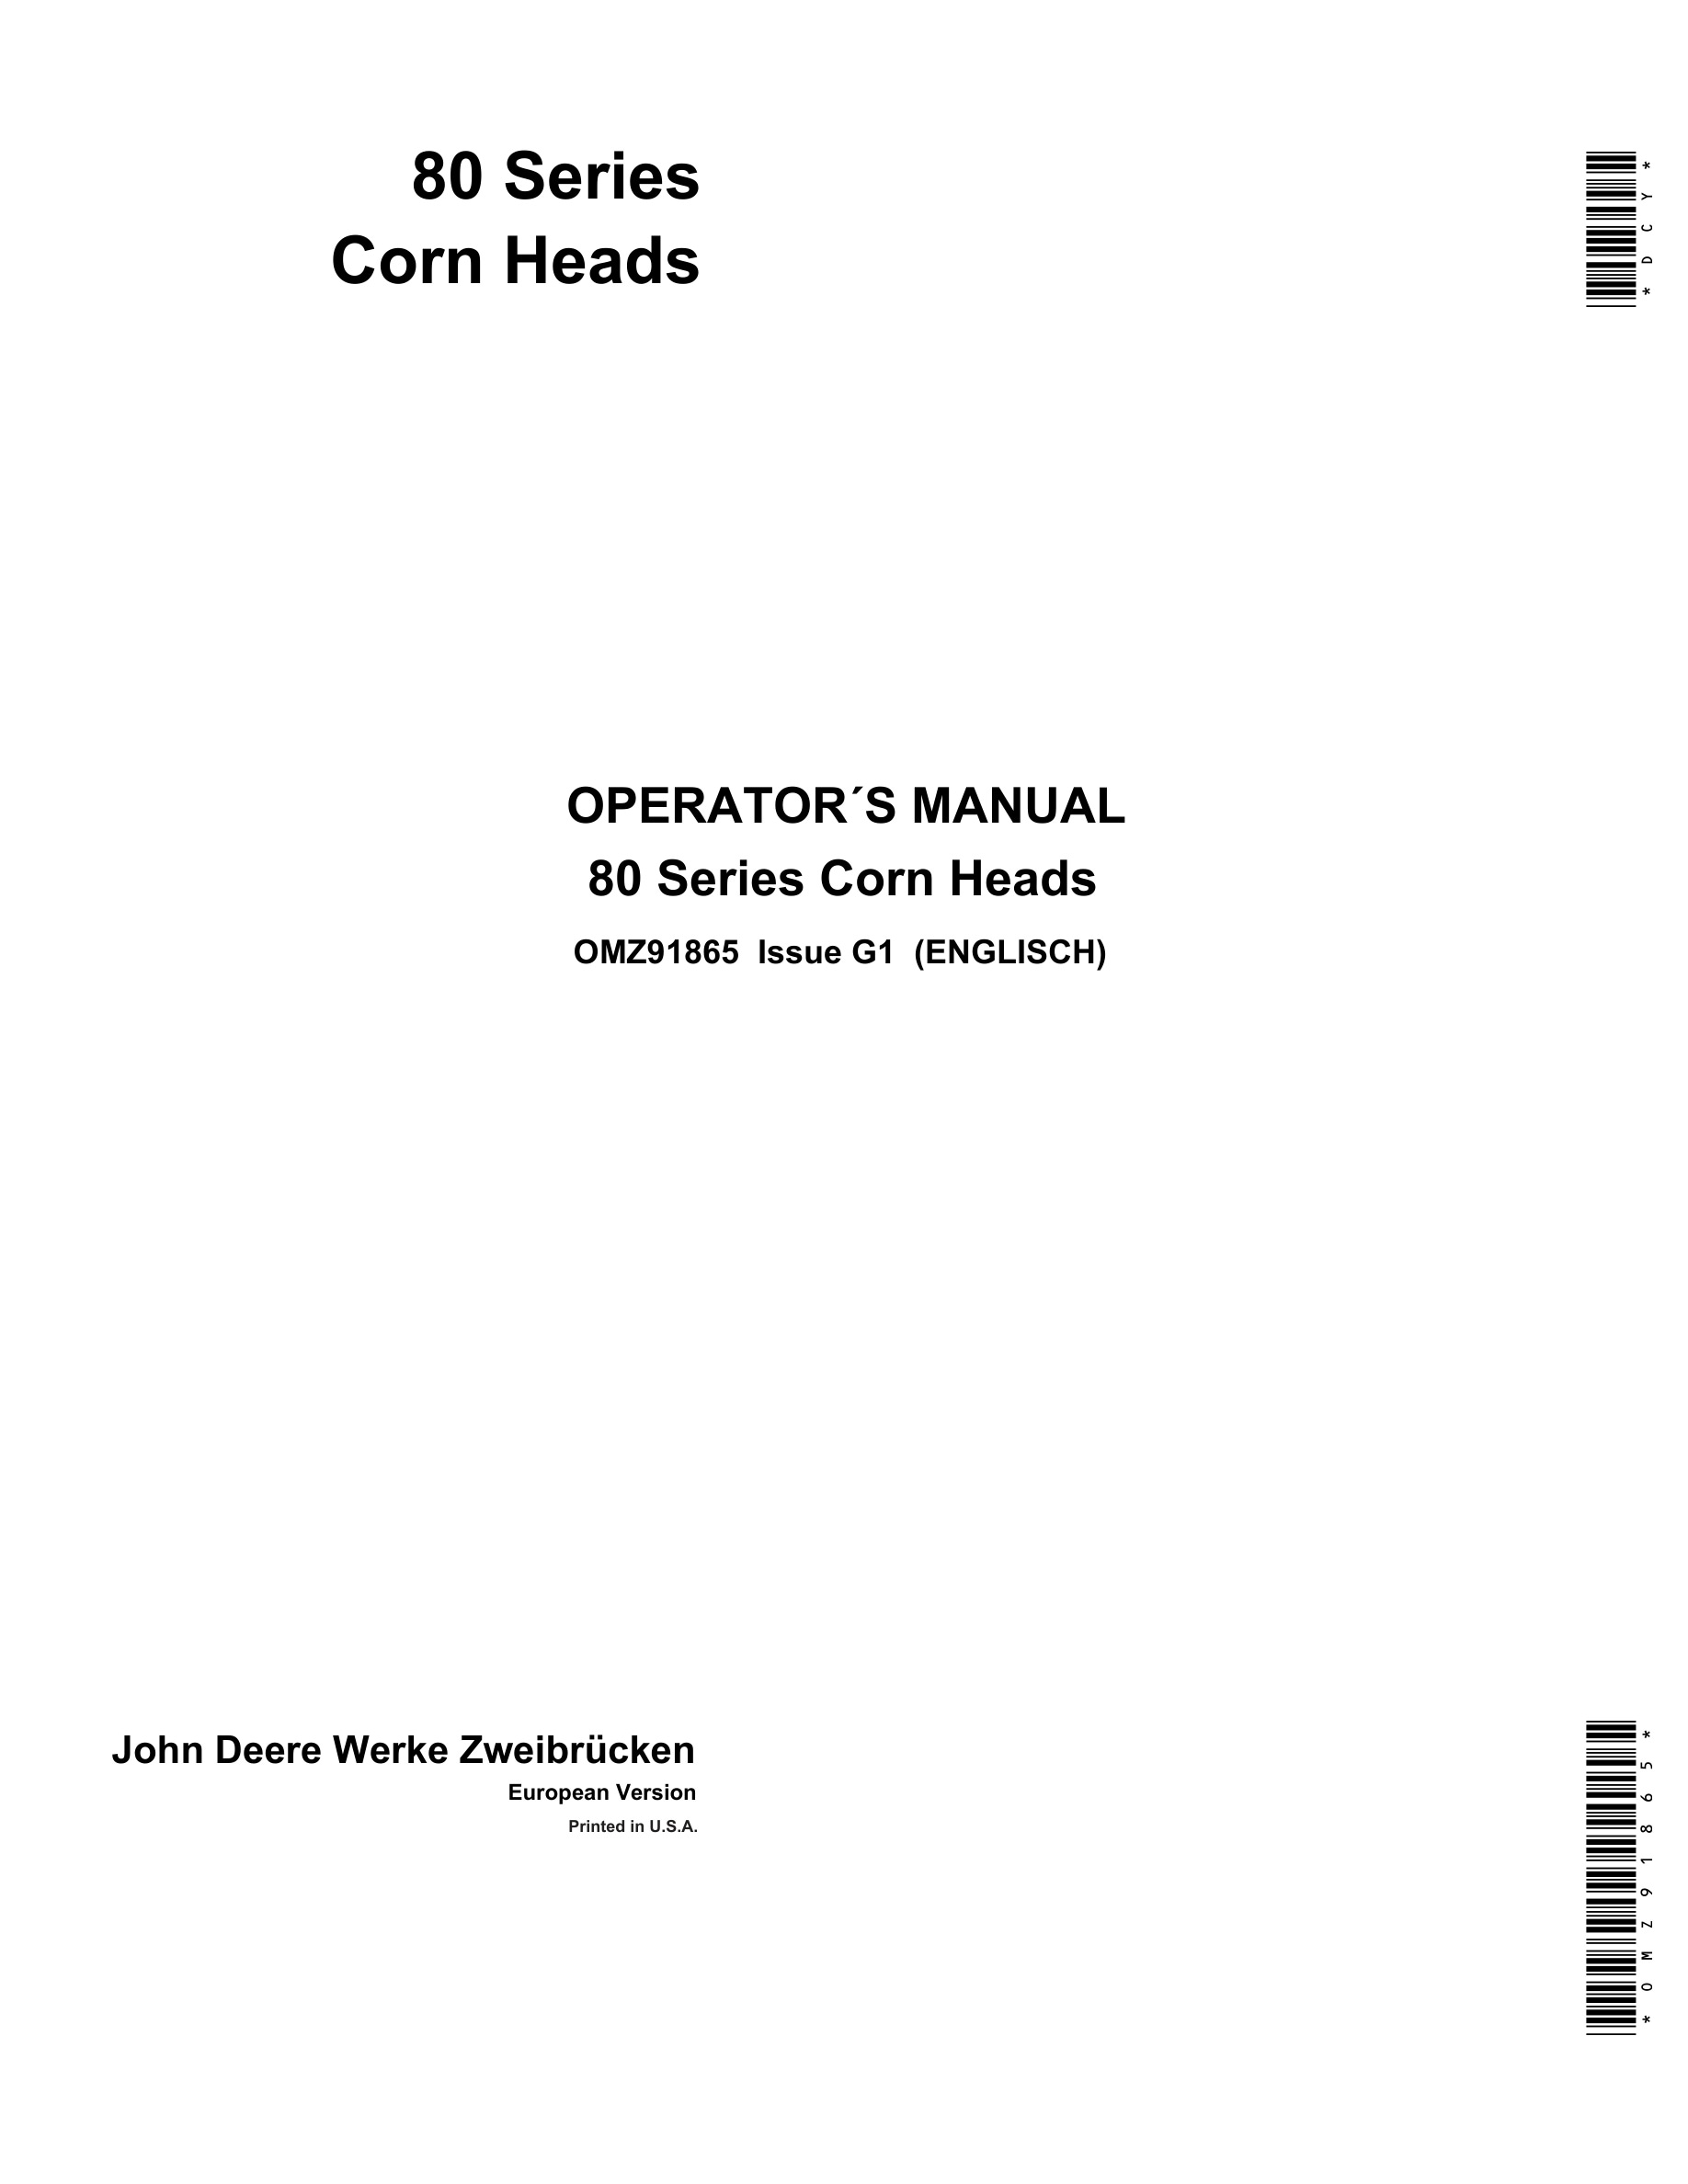 John Deere 80 Series Corn Heads Operator Manual OMZ91865-1